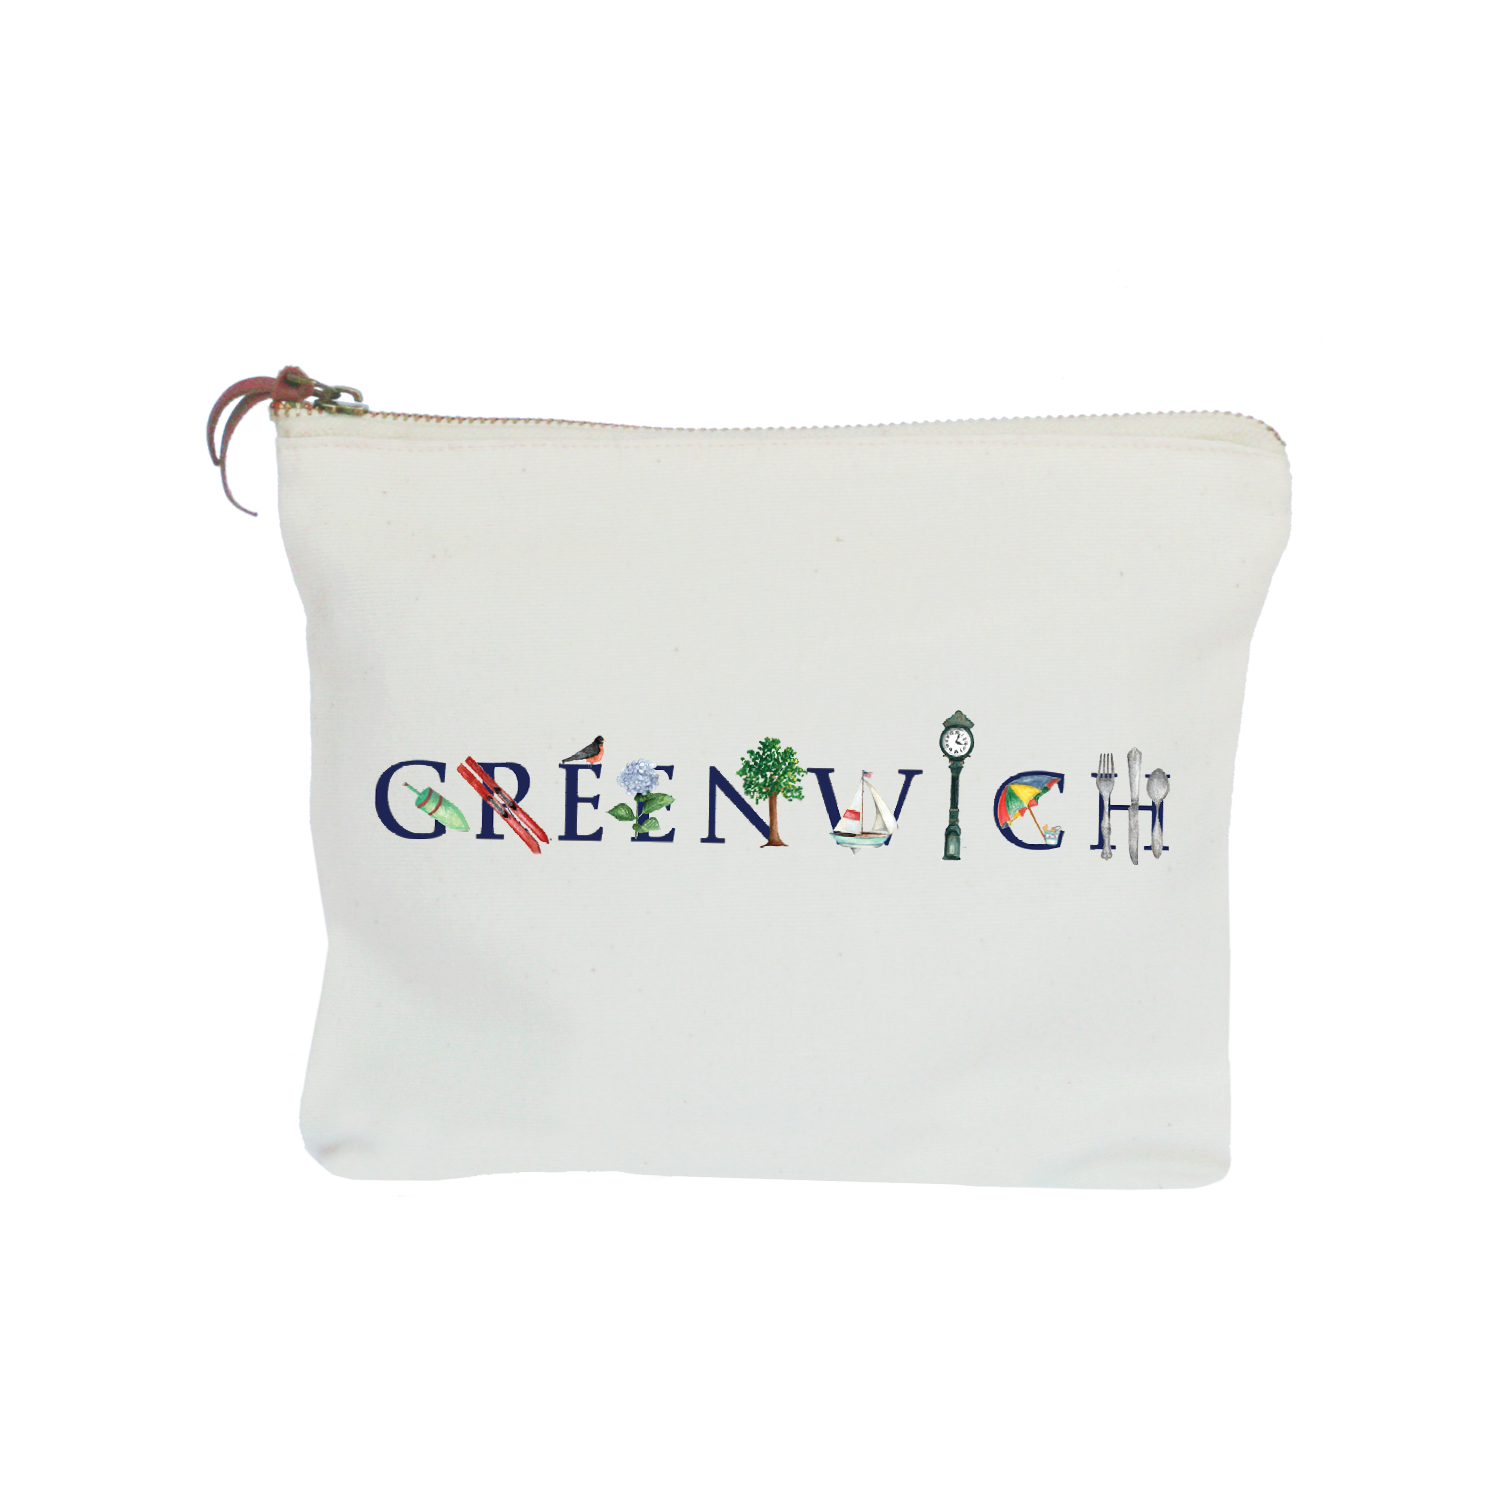 greenwich zipper pouch